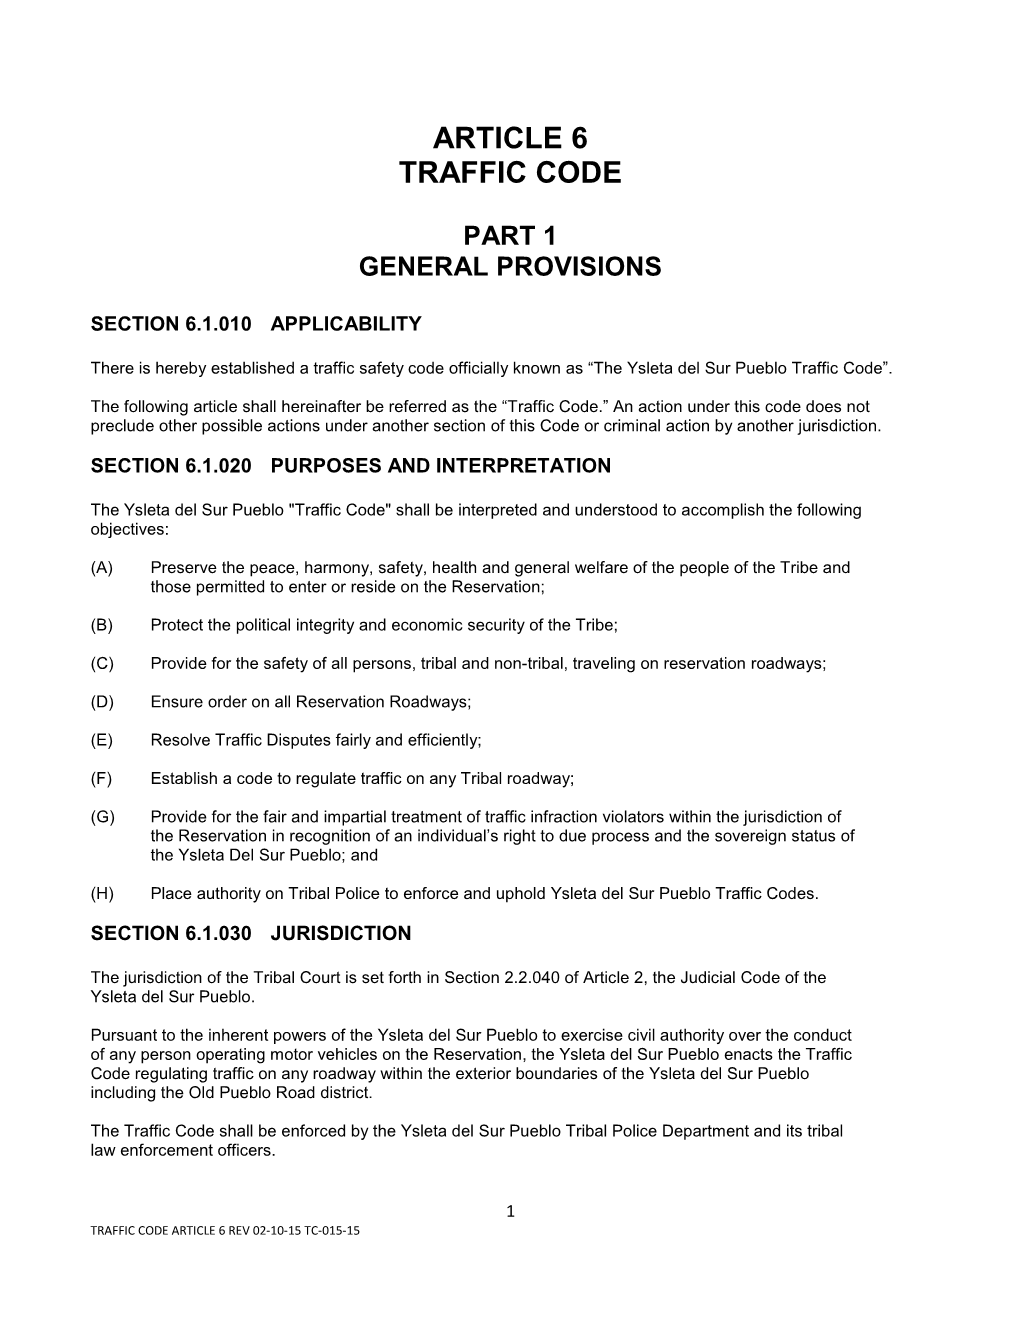 Article 6 Traffic Code